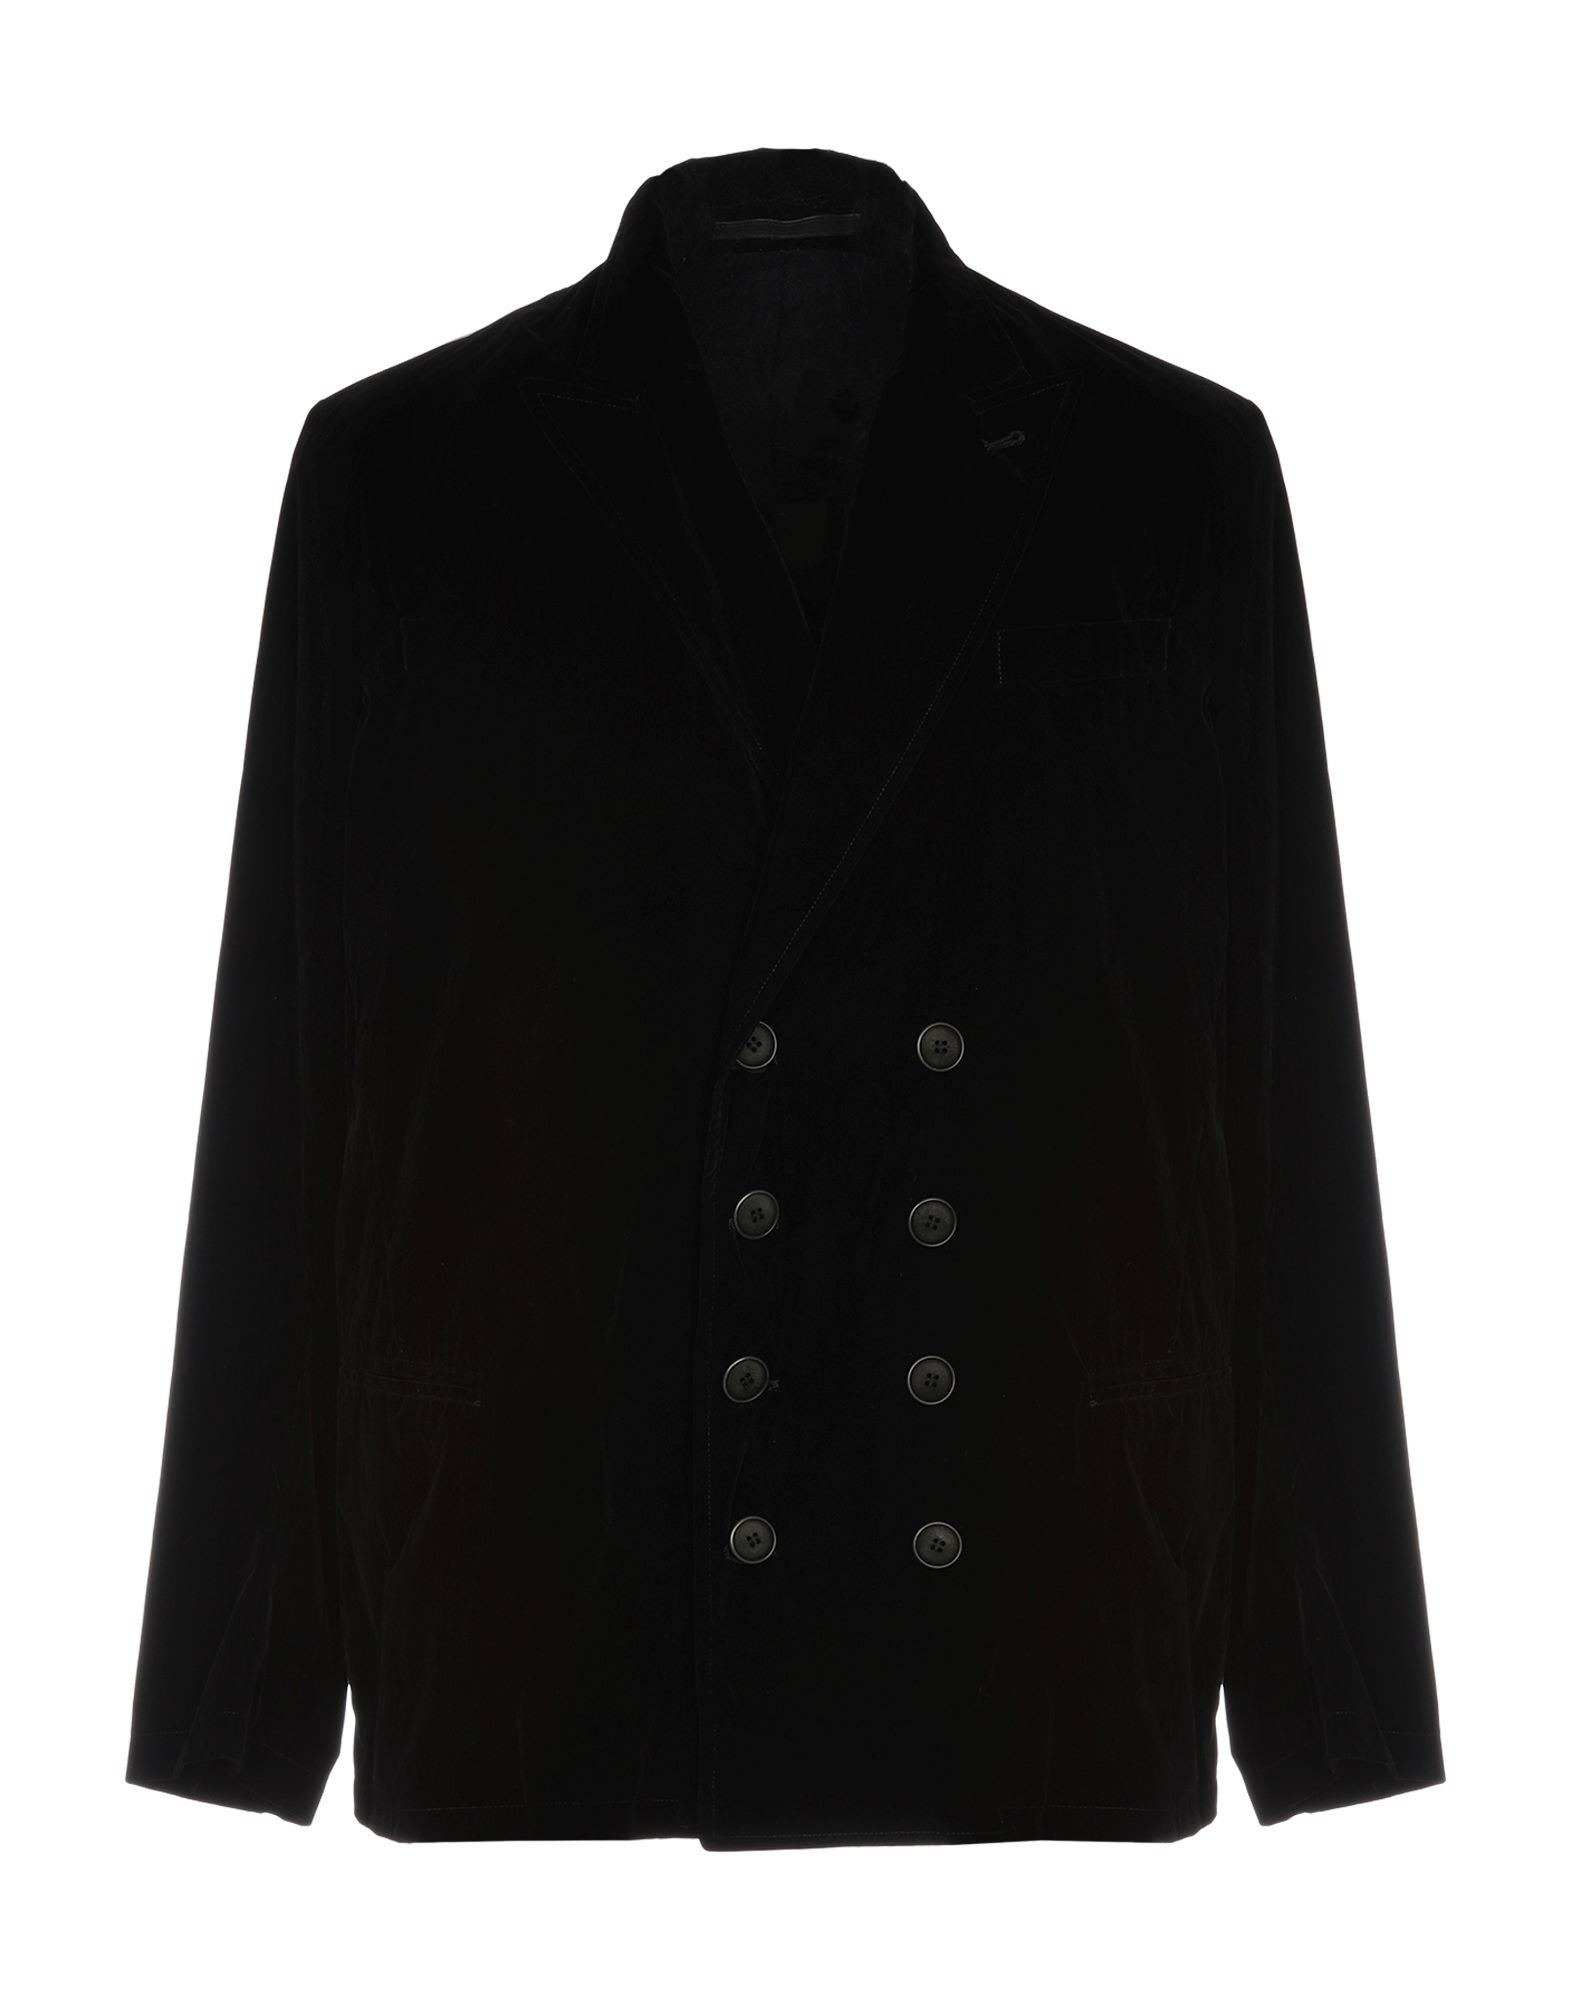 GIORGIO ARMANI Suit jackets - Item 49416663